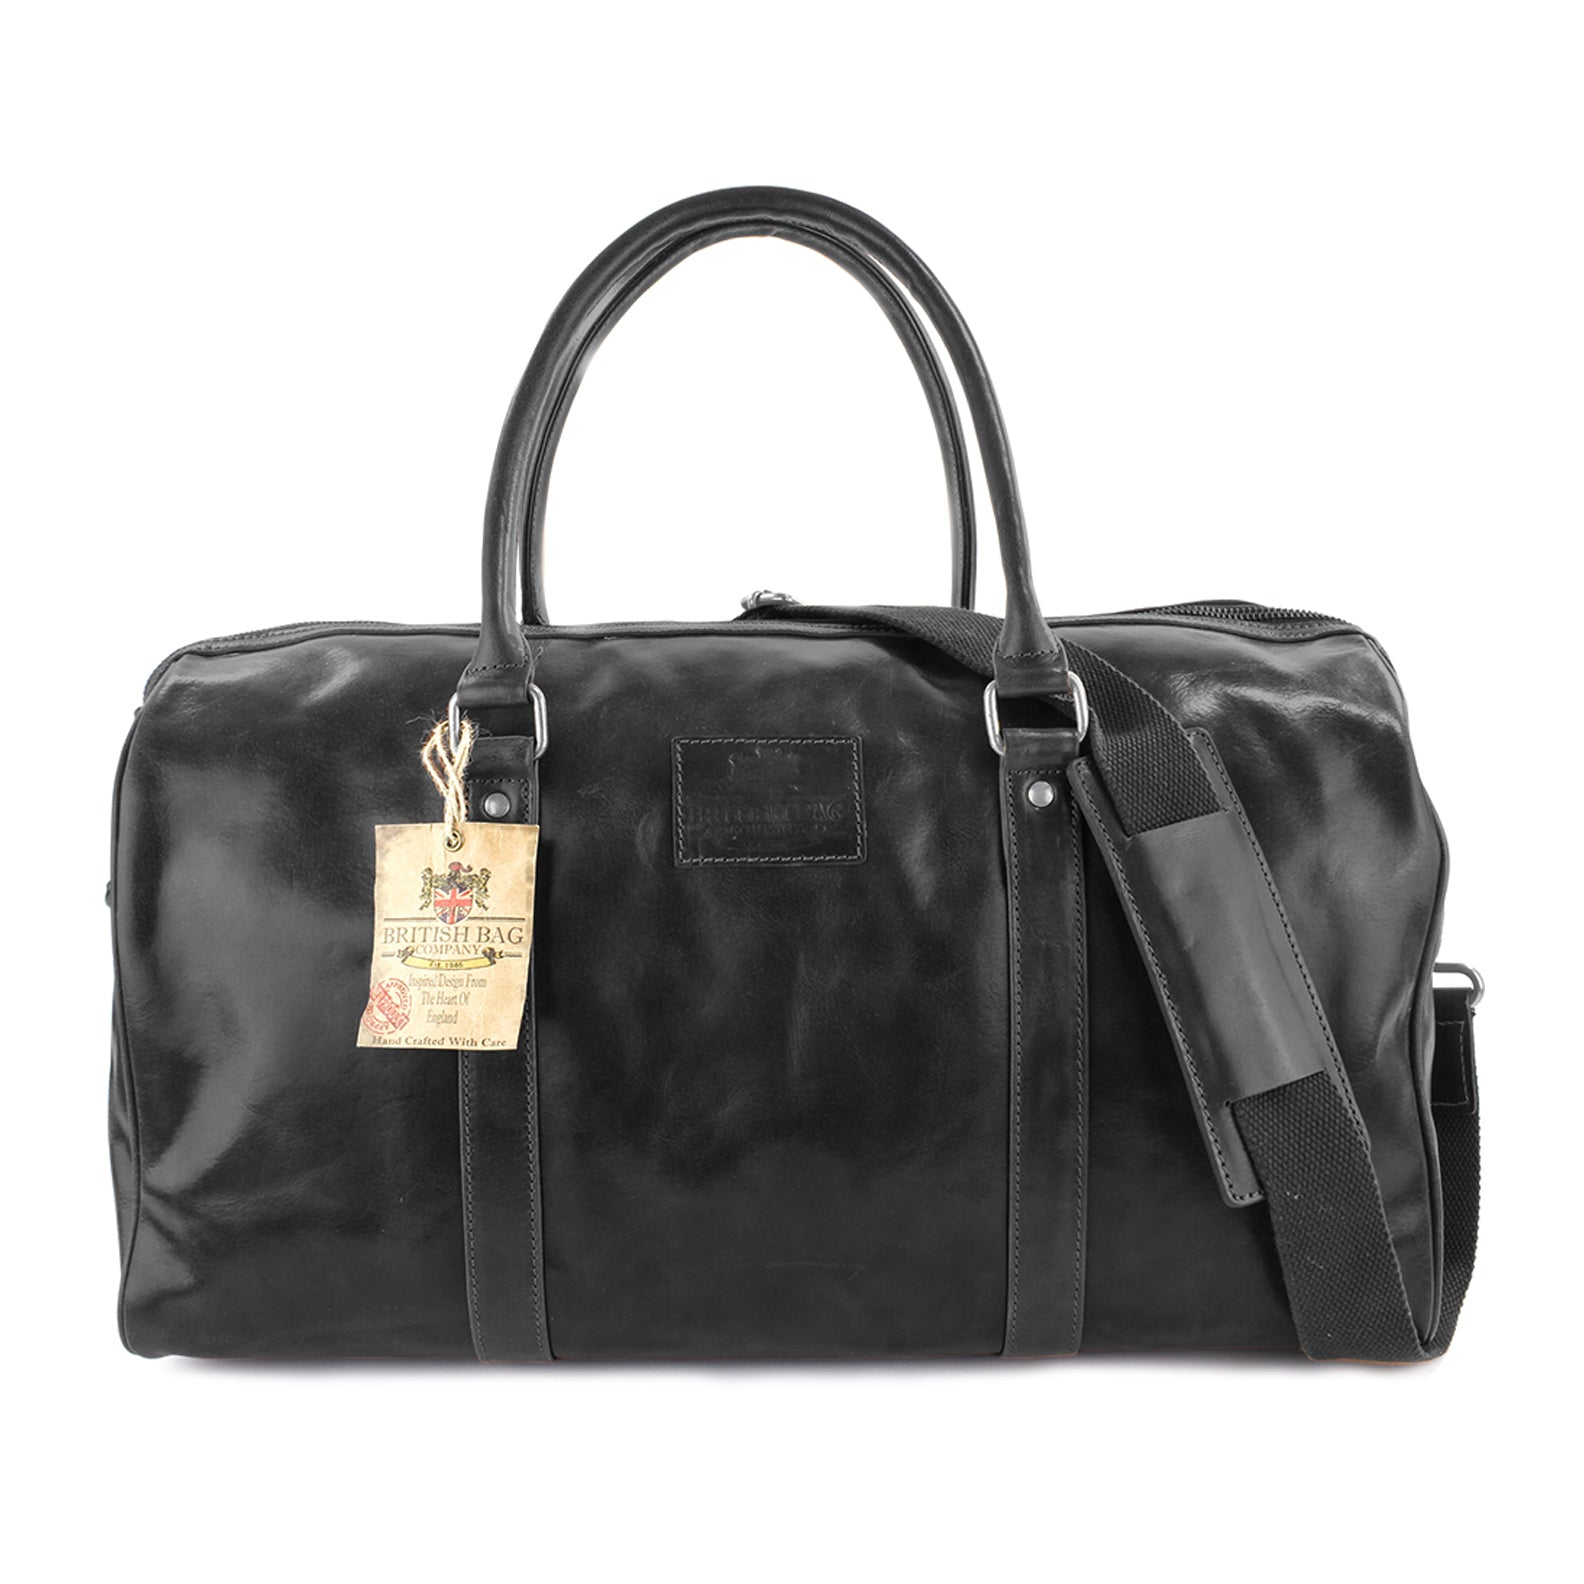 British Bag Co. Black Leather Holdall